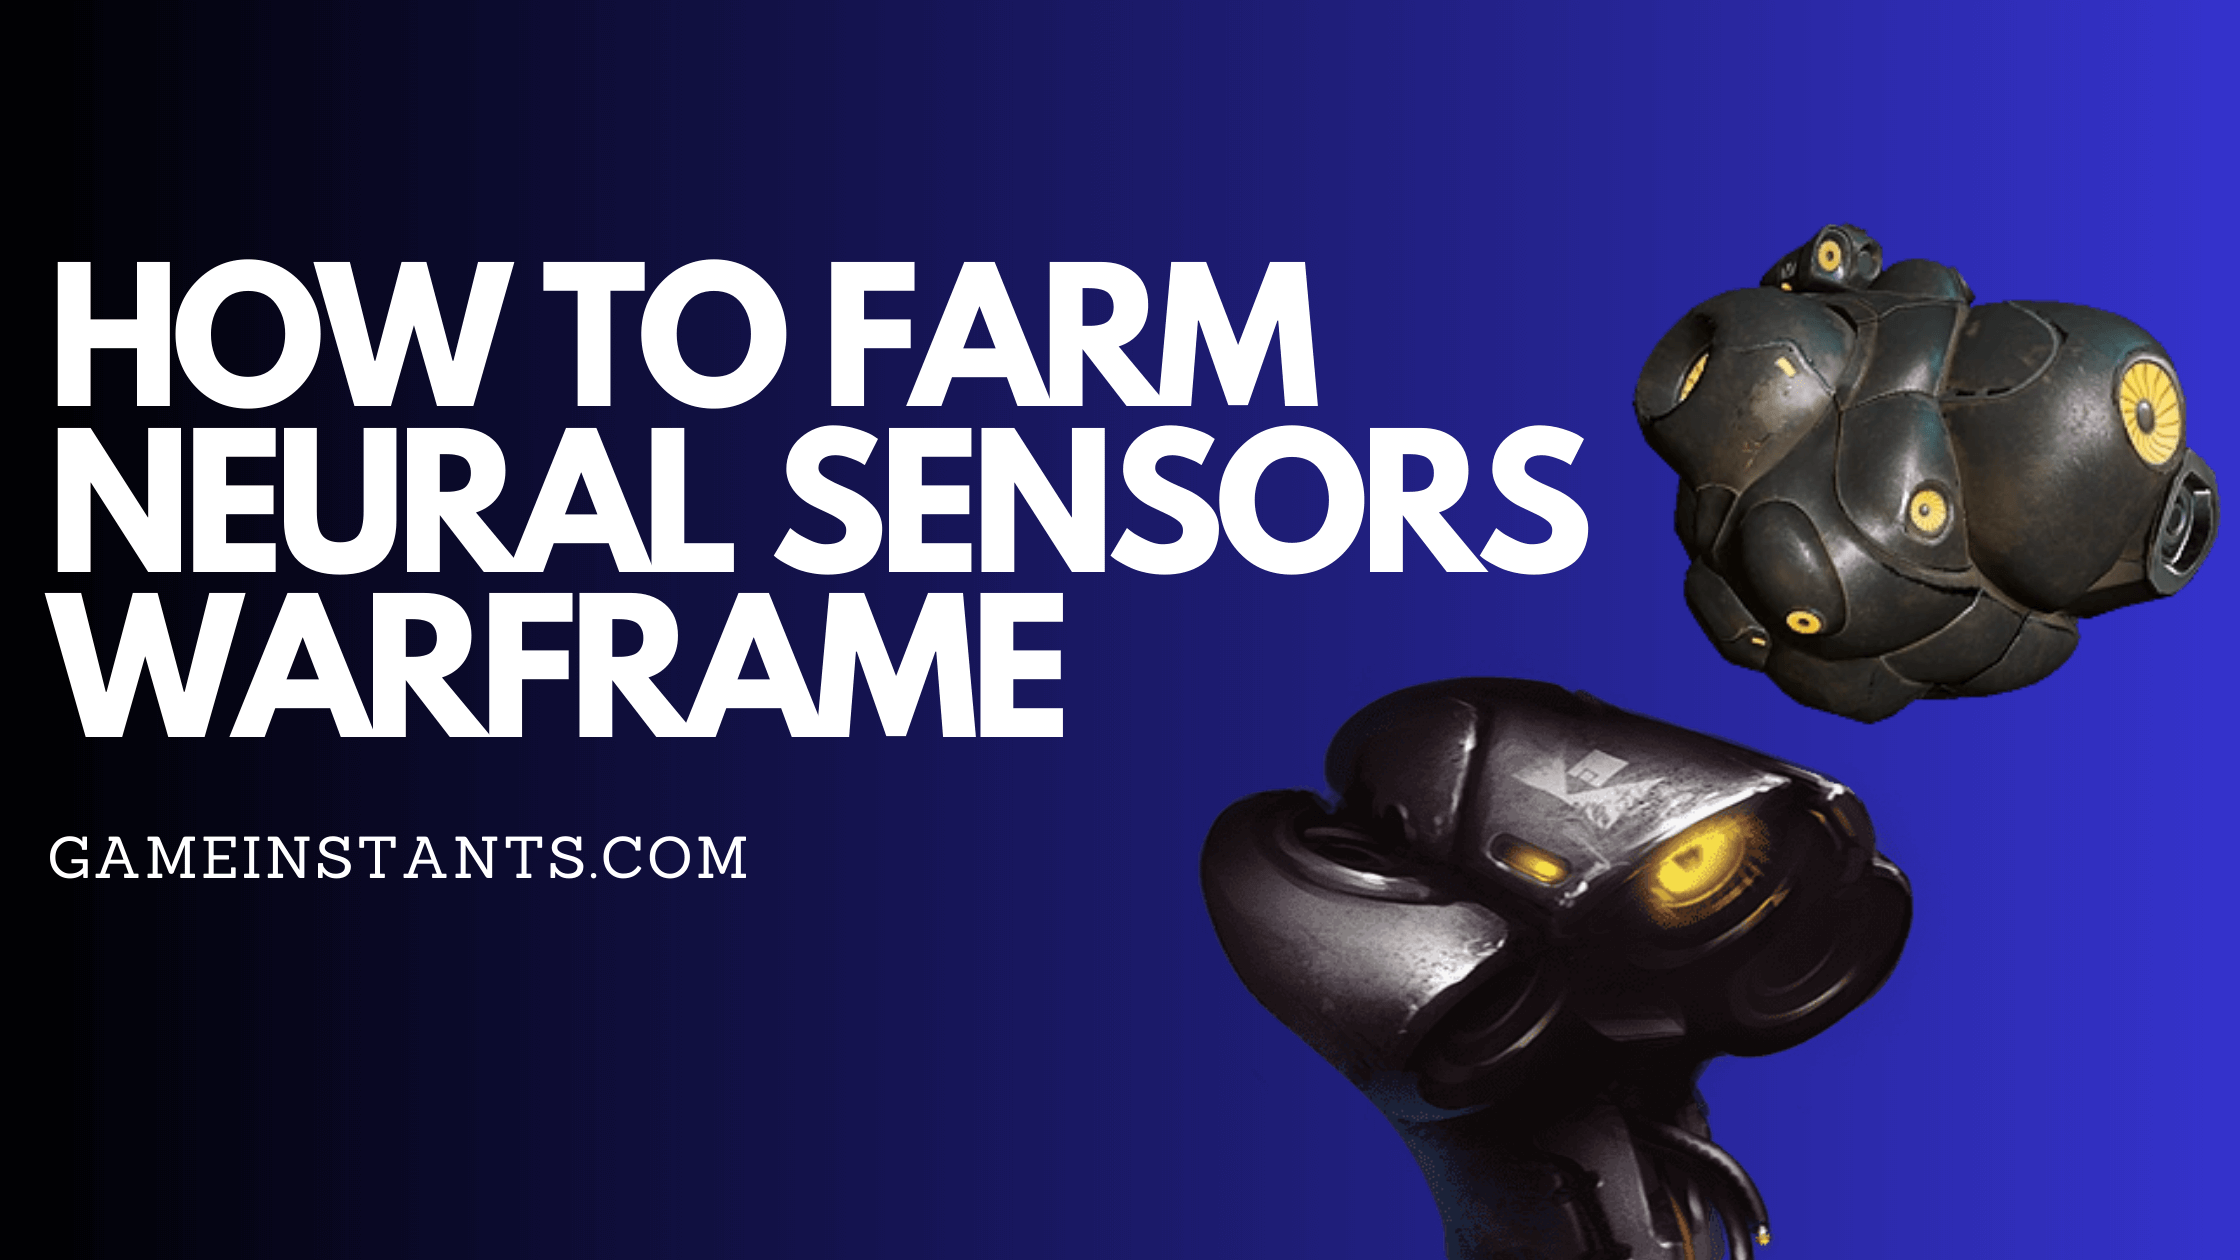 How to Farm Neural Sensors Warframe